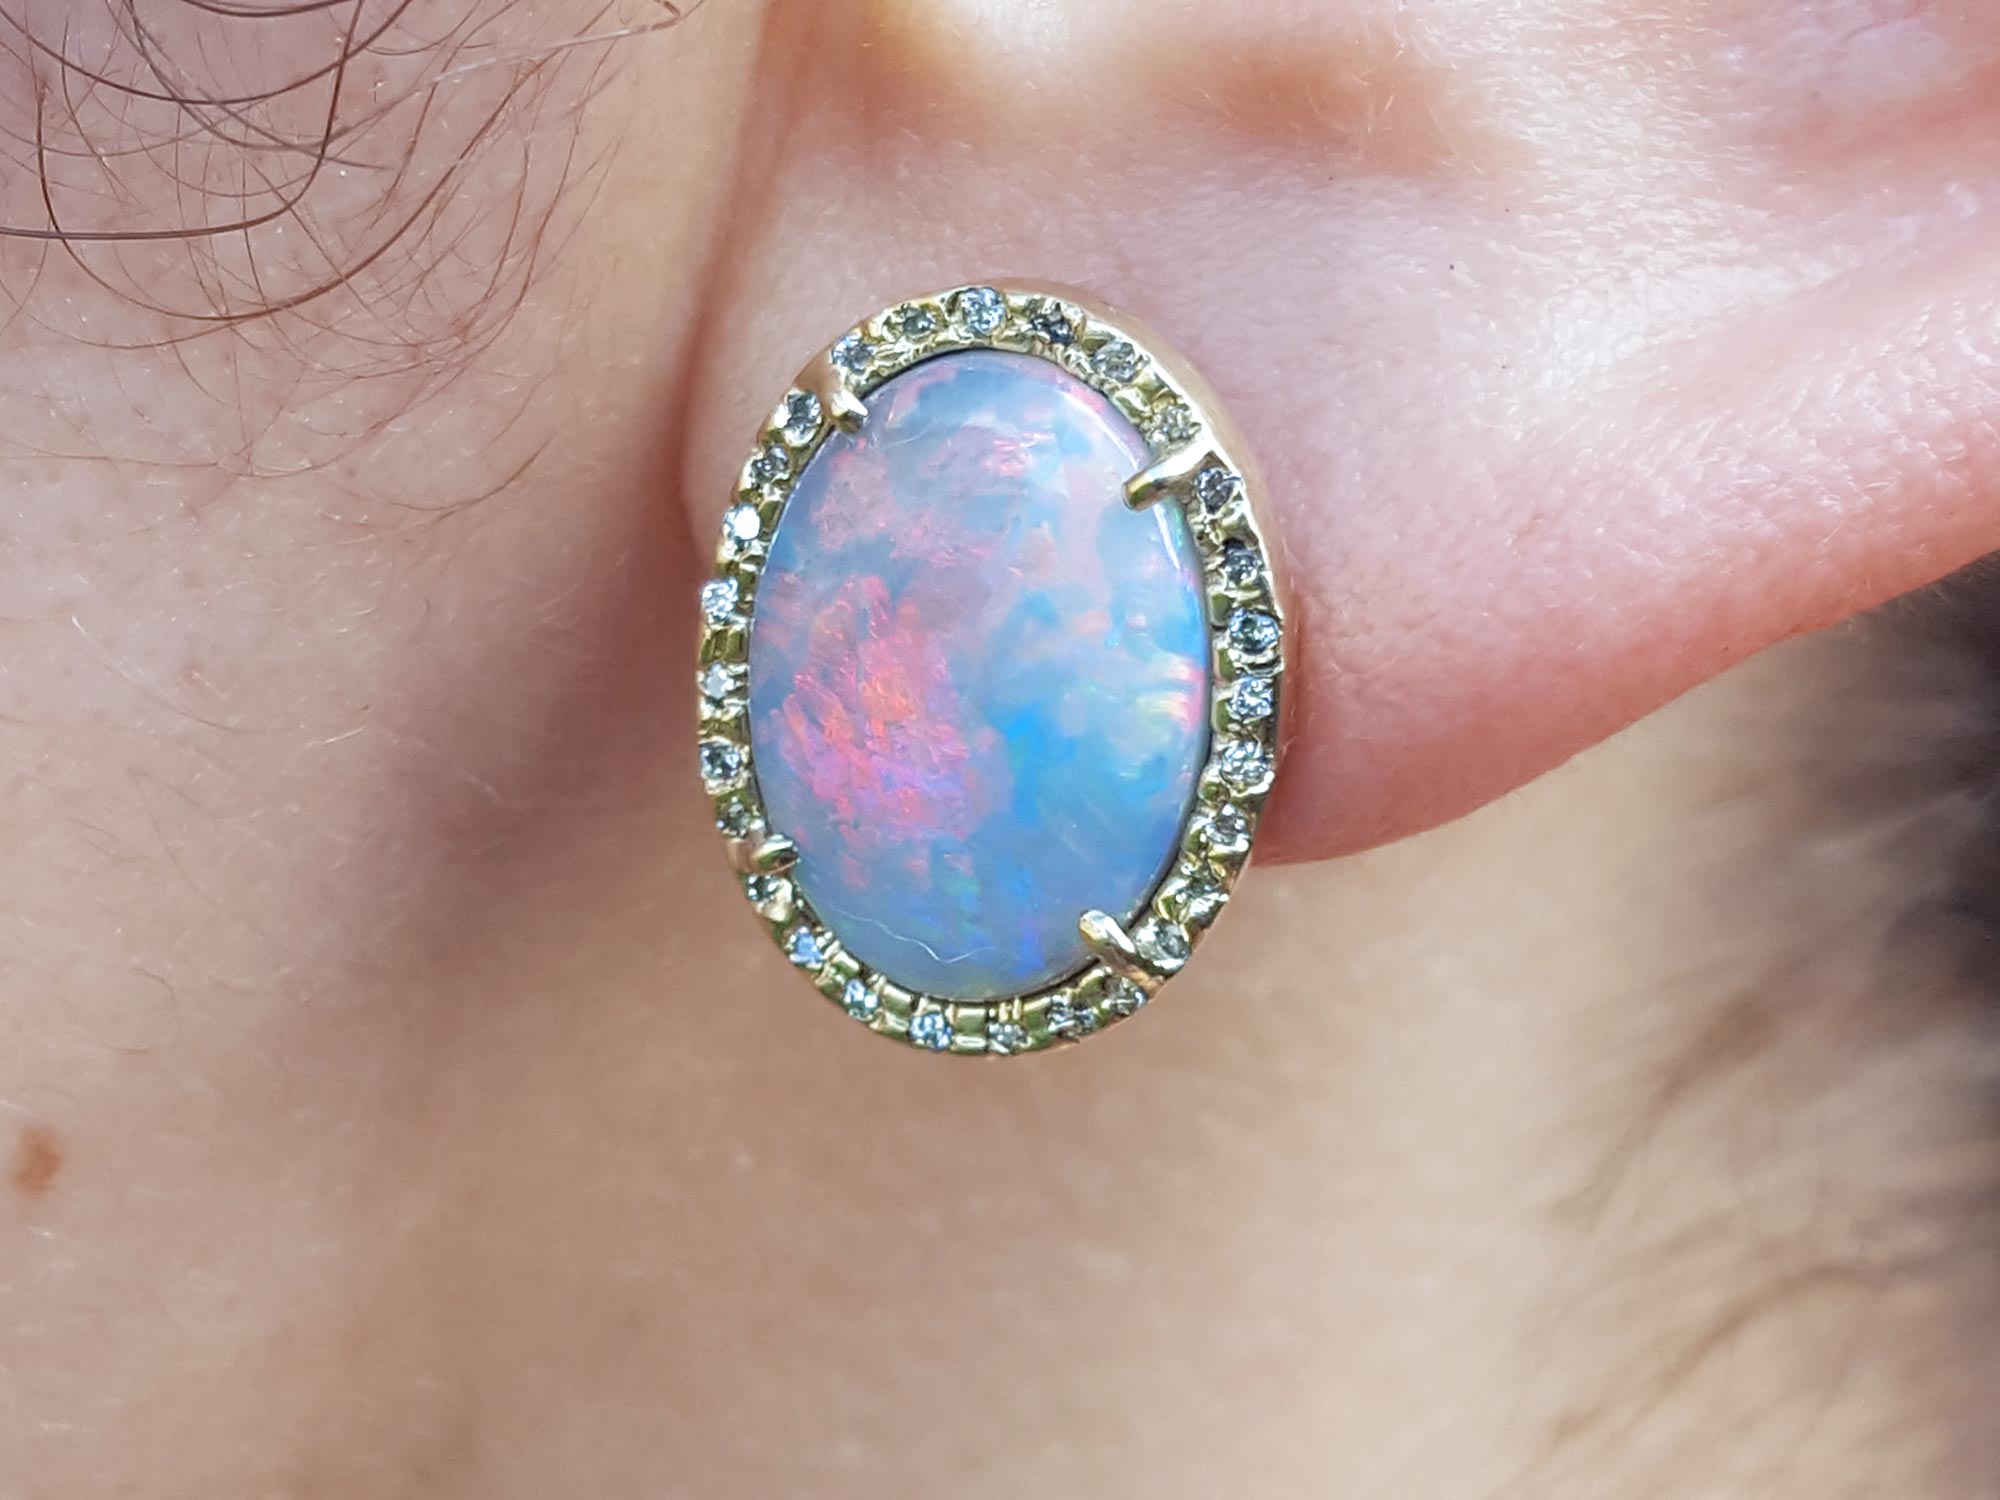 Solid opal and diamond earrings